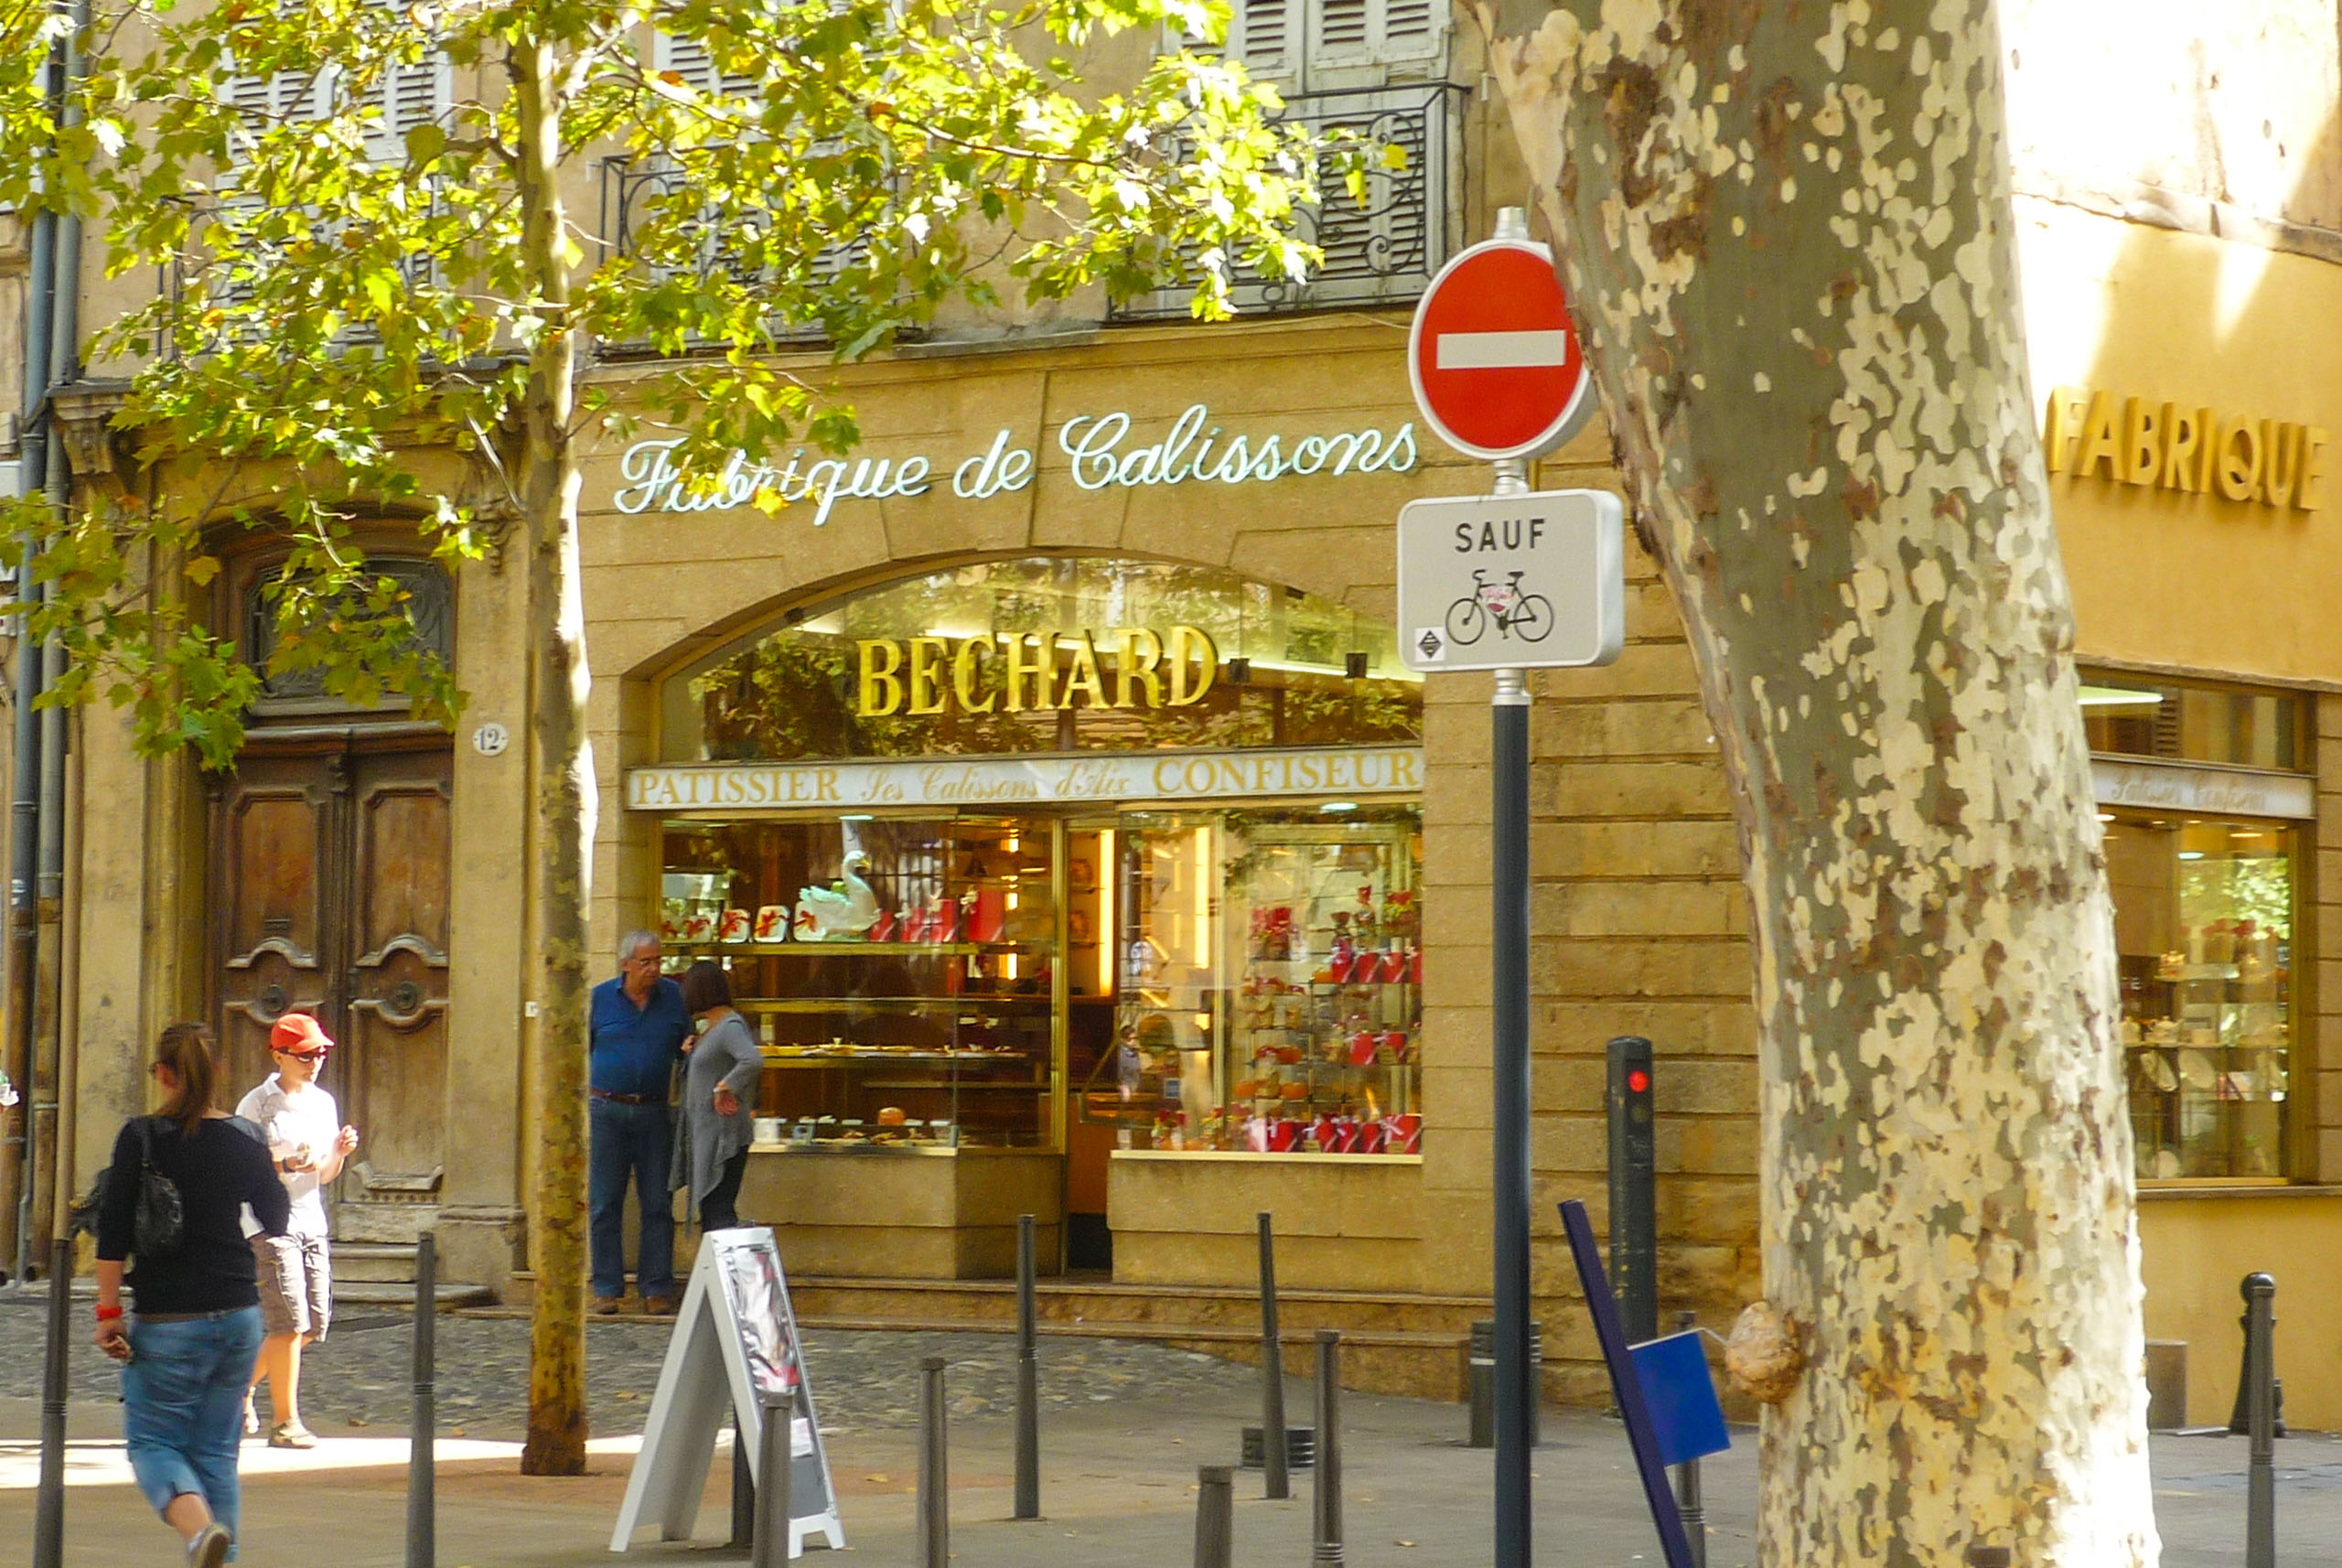 Calissons d'Aix, 4x50g - online delicatessen